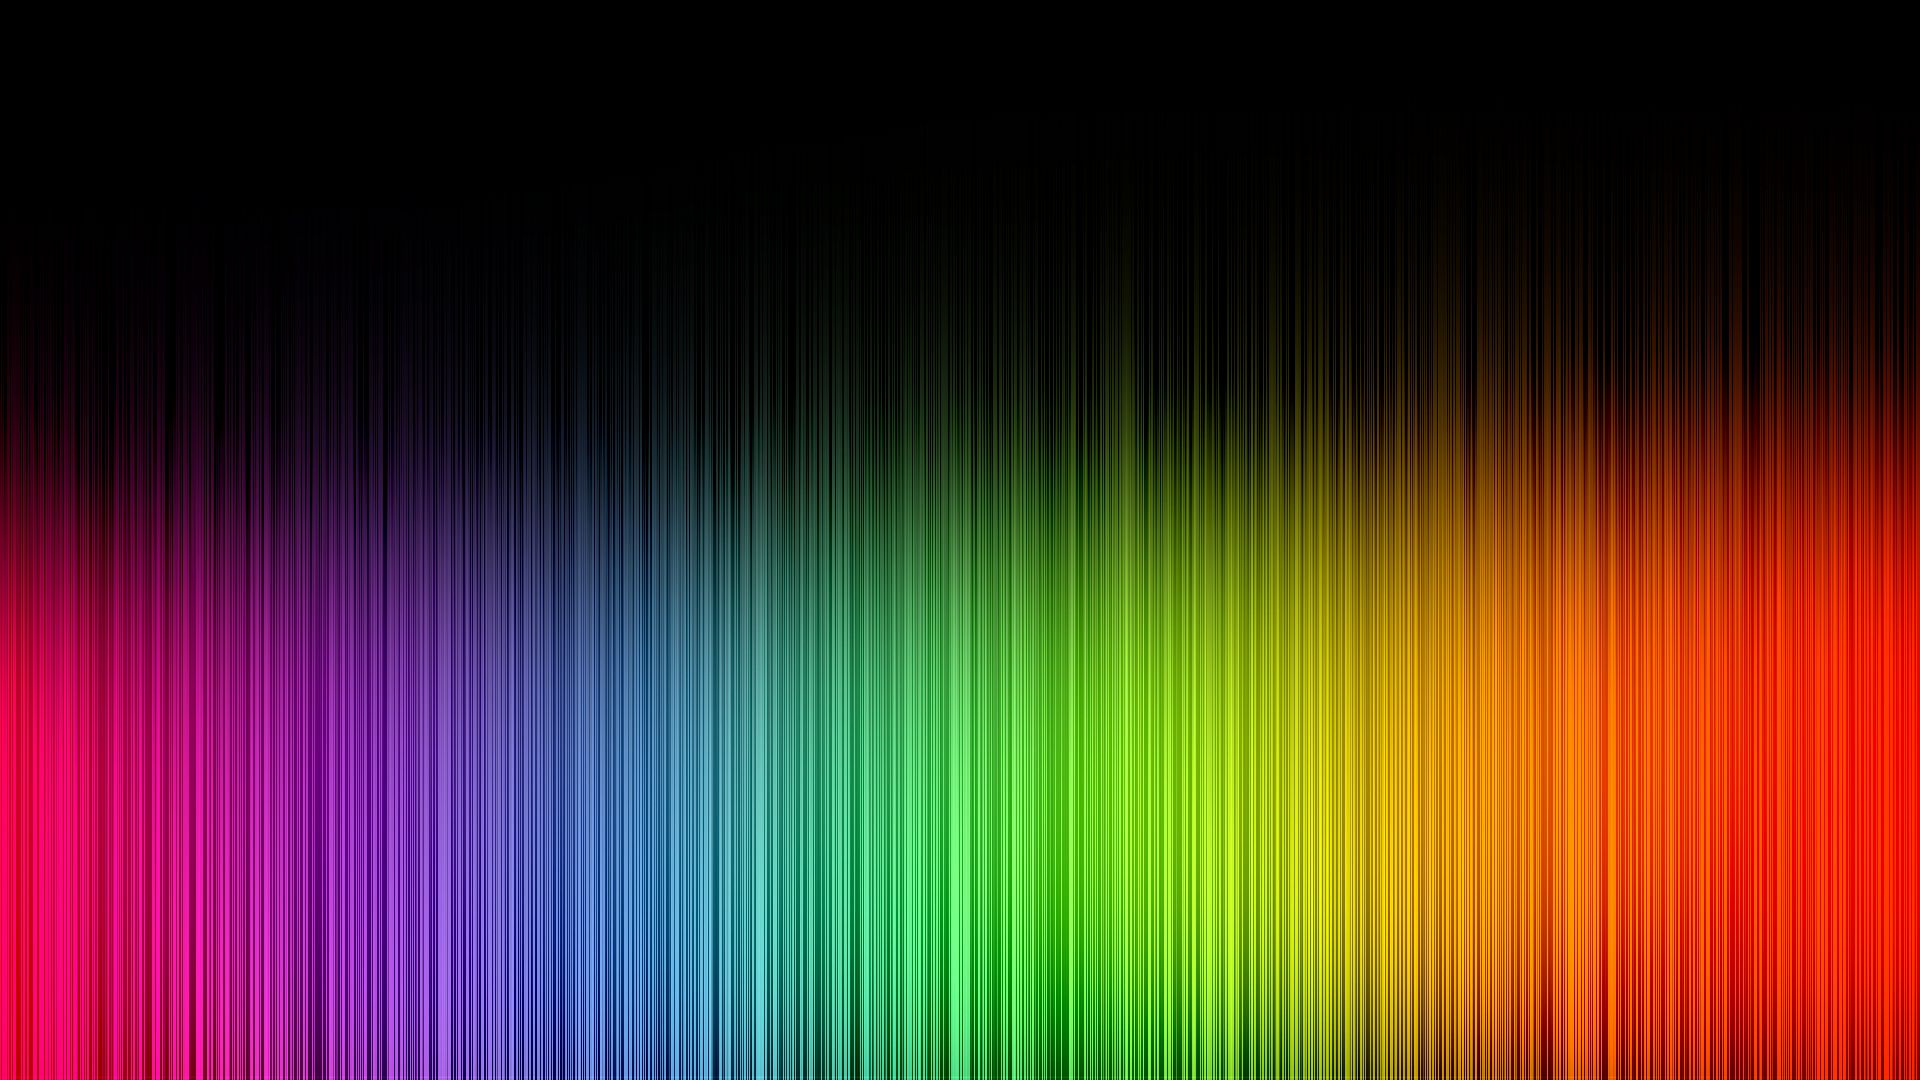 Spectral Wallpaper. Spectral Wallpaper, Spectral Awesome Lightning Background and Spectral Mov Wallpaper